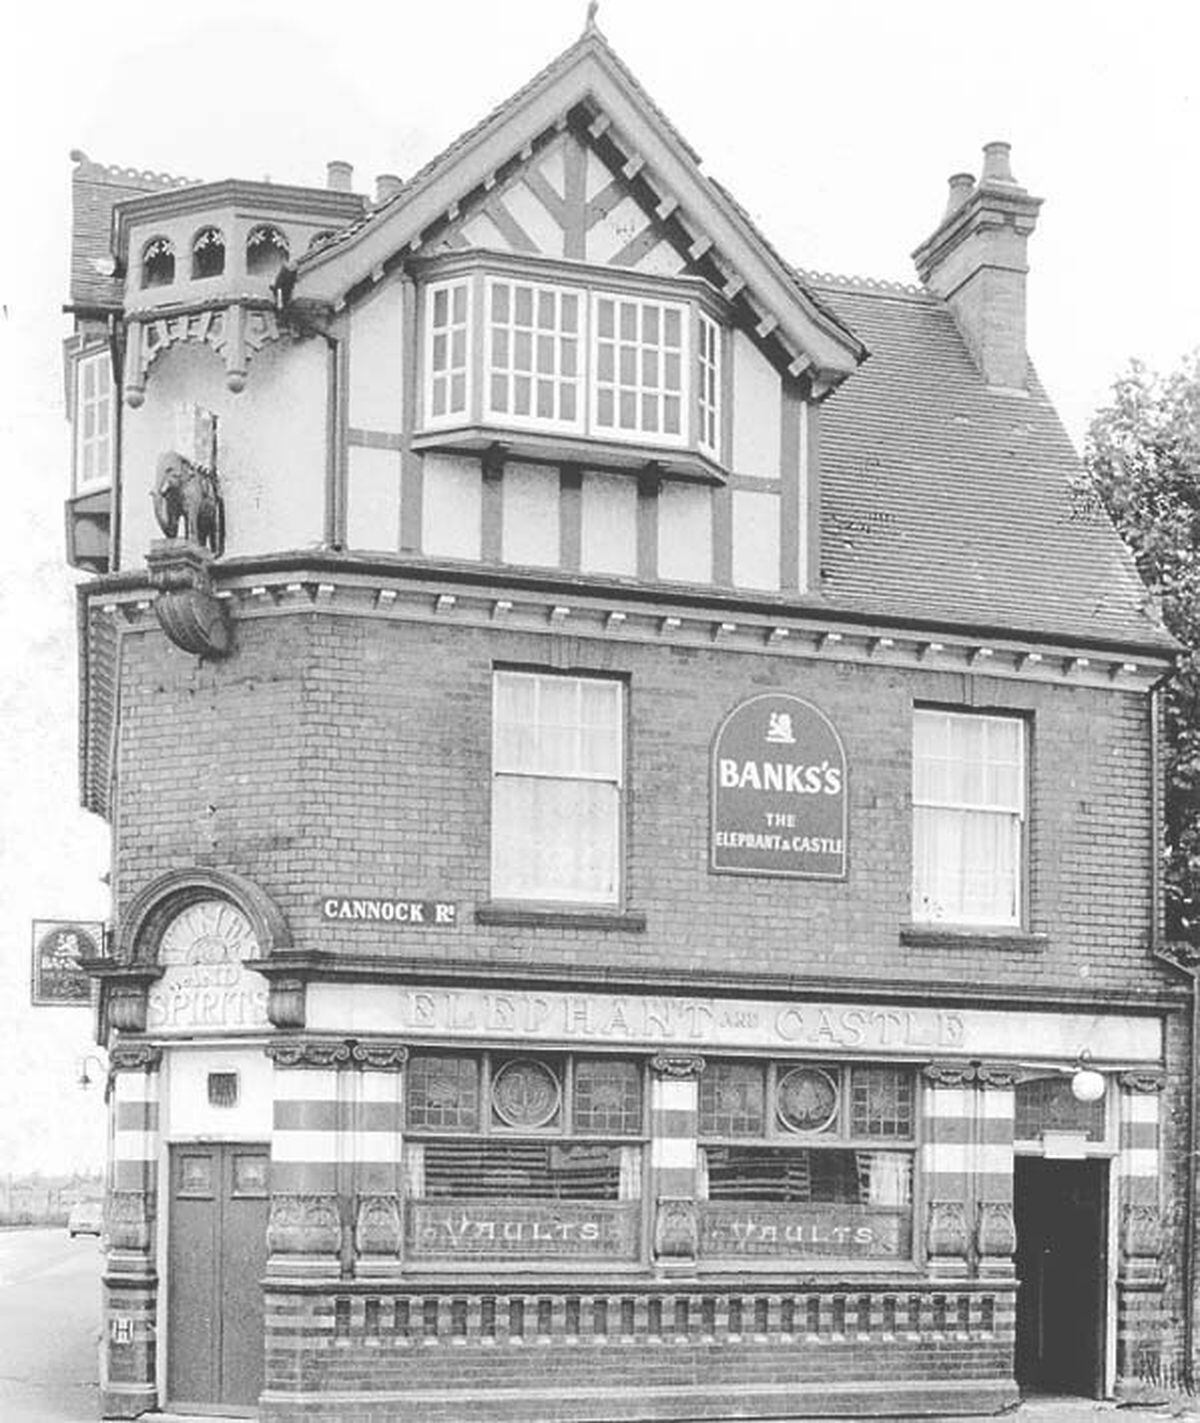 The pub in September 1975